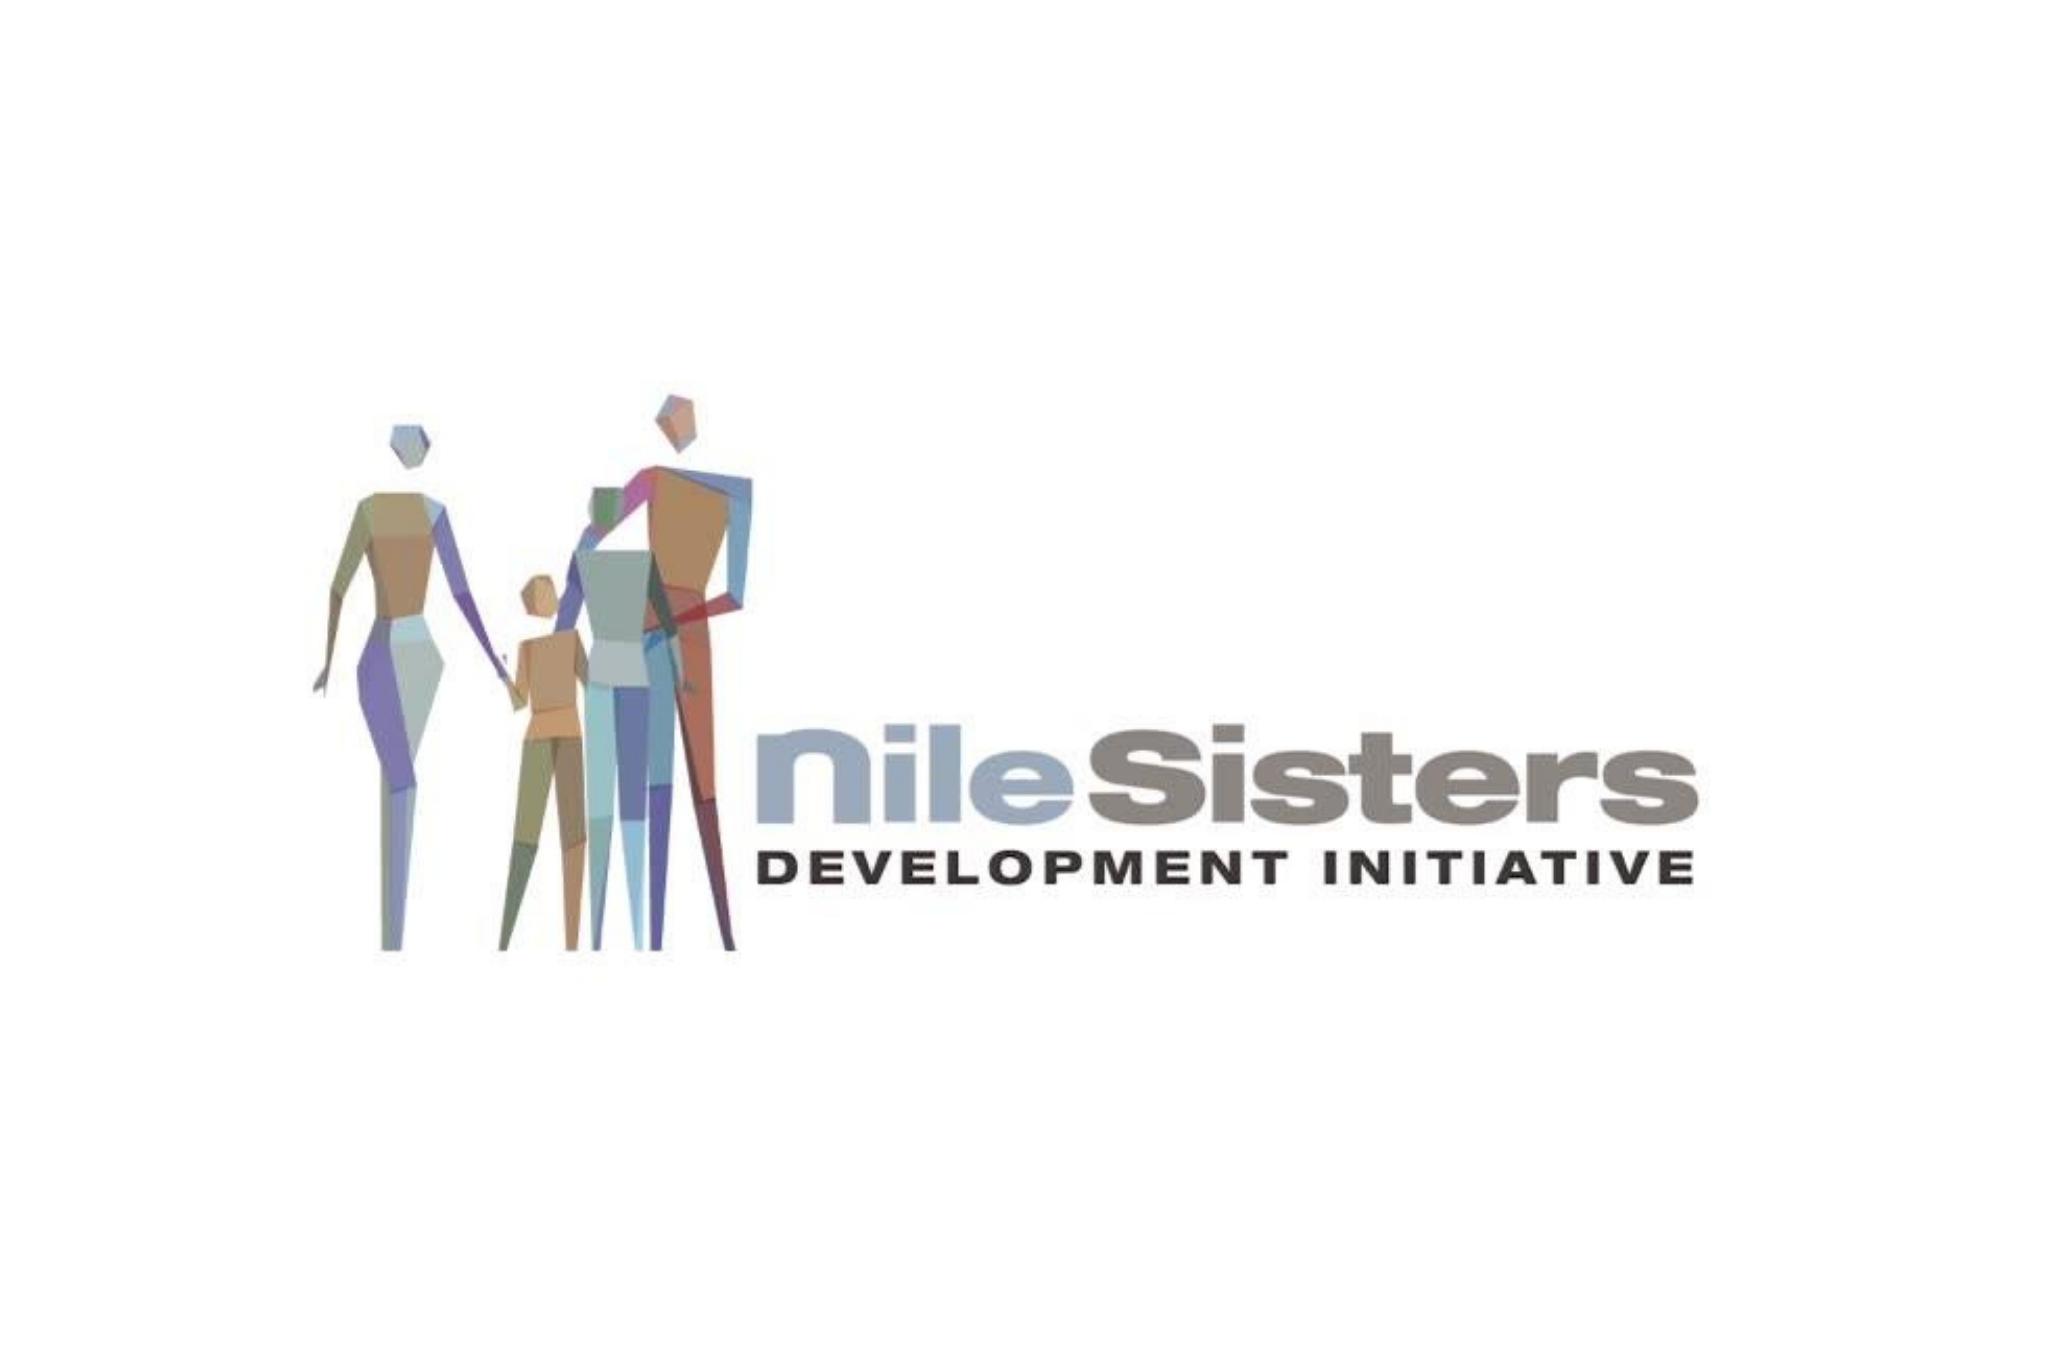 Nile Sisters Development Initiative